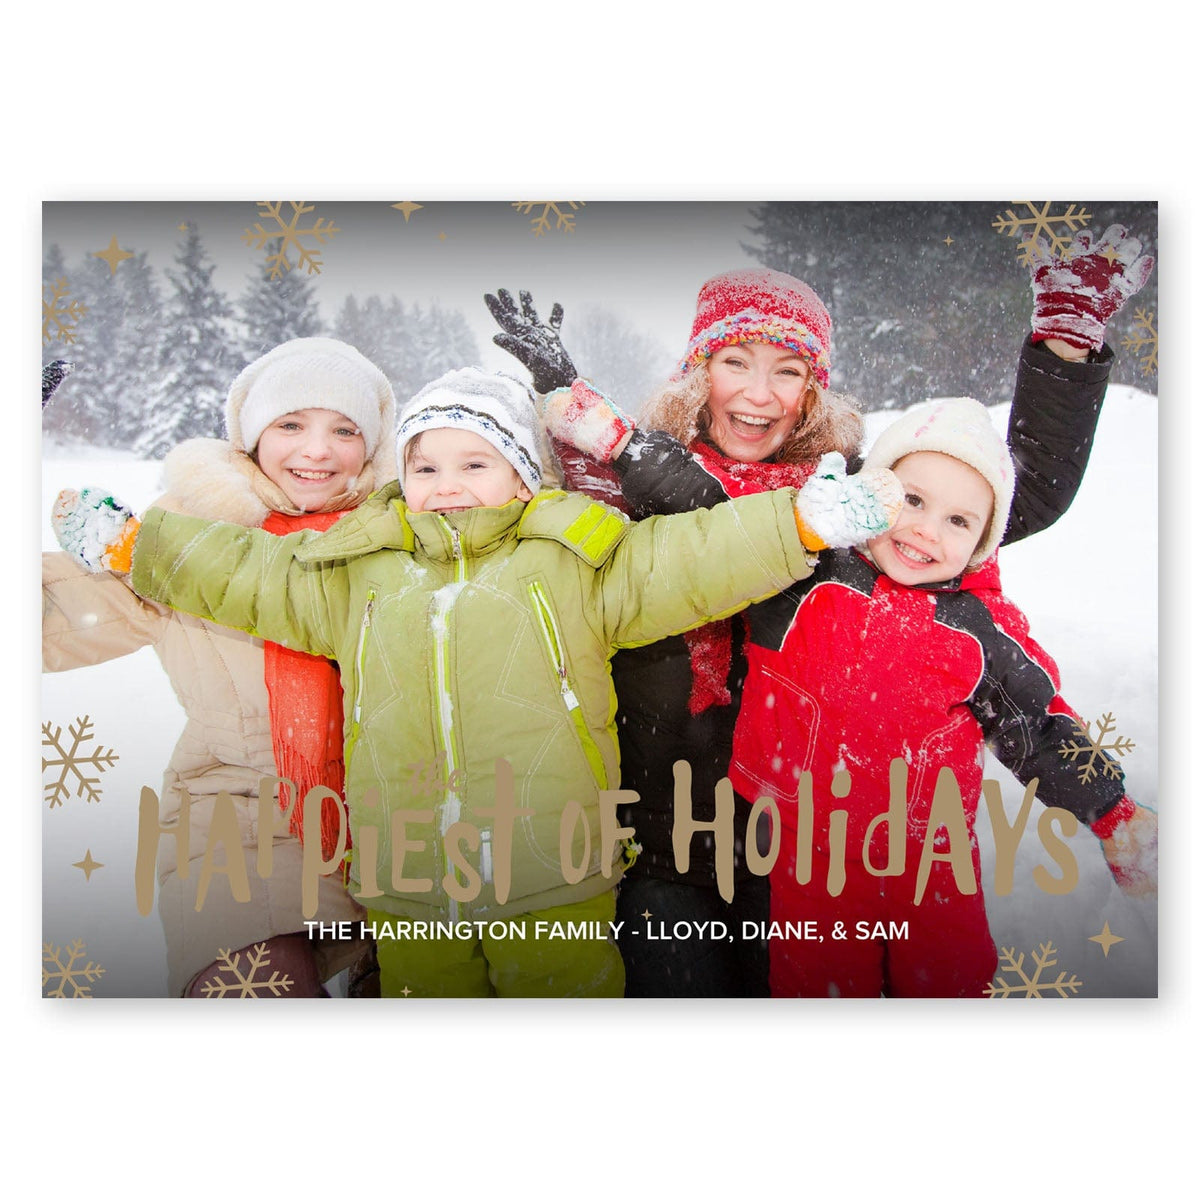 Happiest of Holidays Holiday Card Gold Gartner Studios Christmas Card